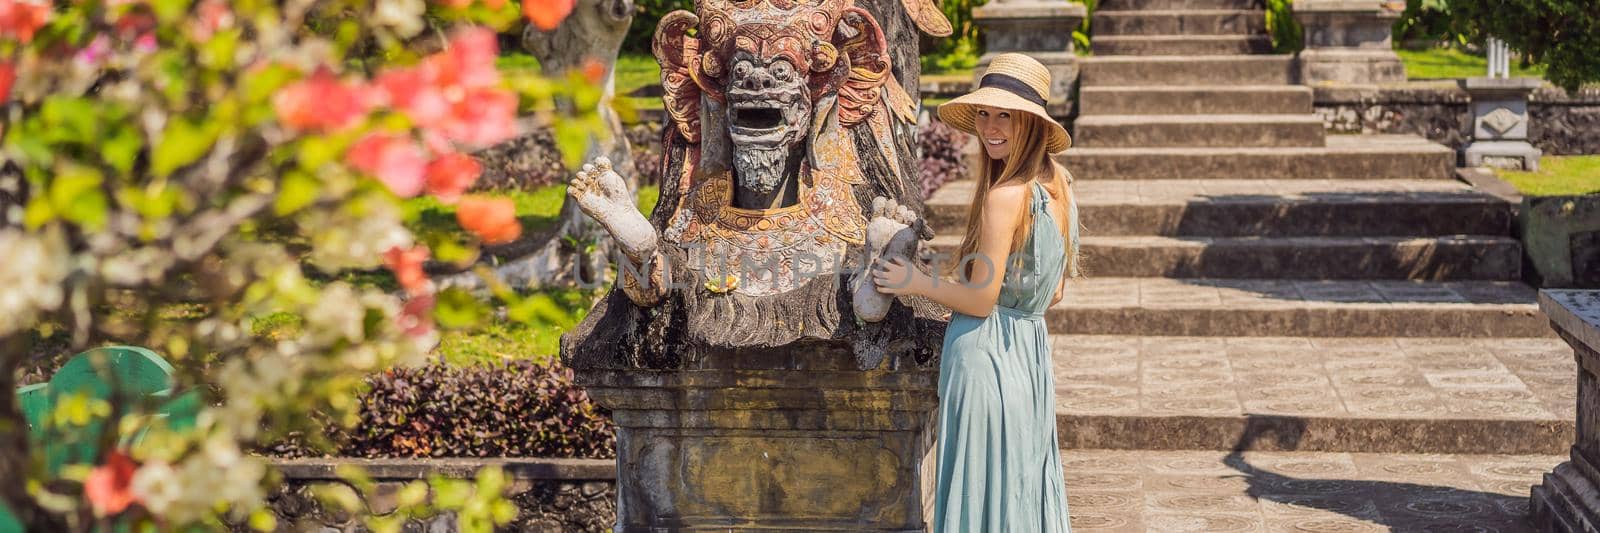 Young woman tourist in Taman Tirtagangga, Water palace, Water park, Bali Indonesia. BANNER, LONG FORMAT